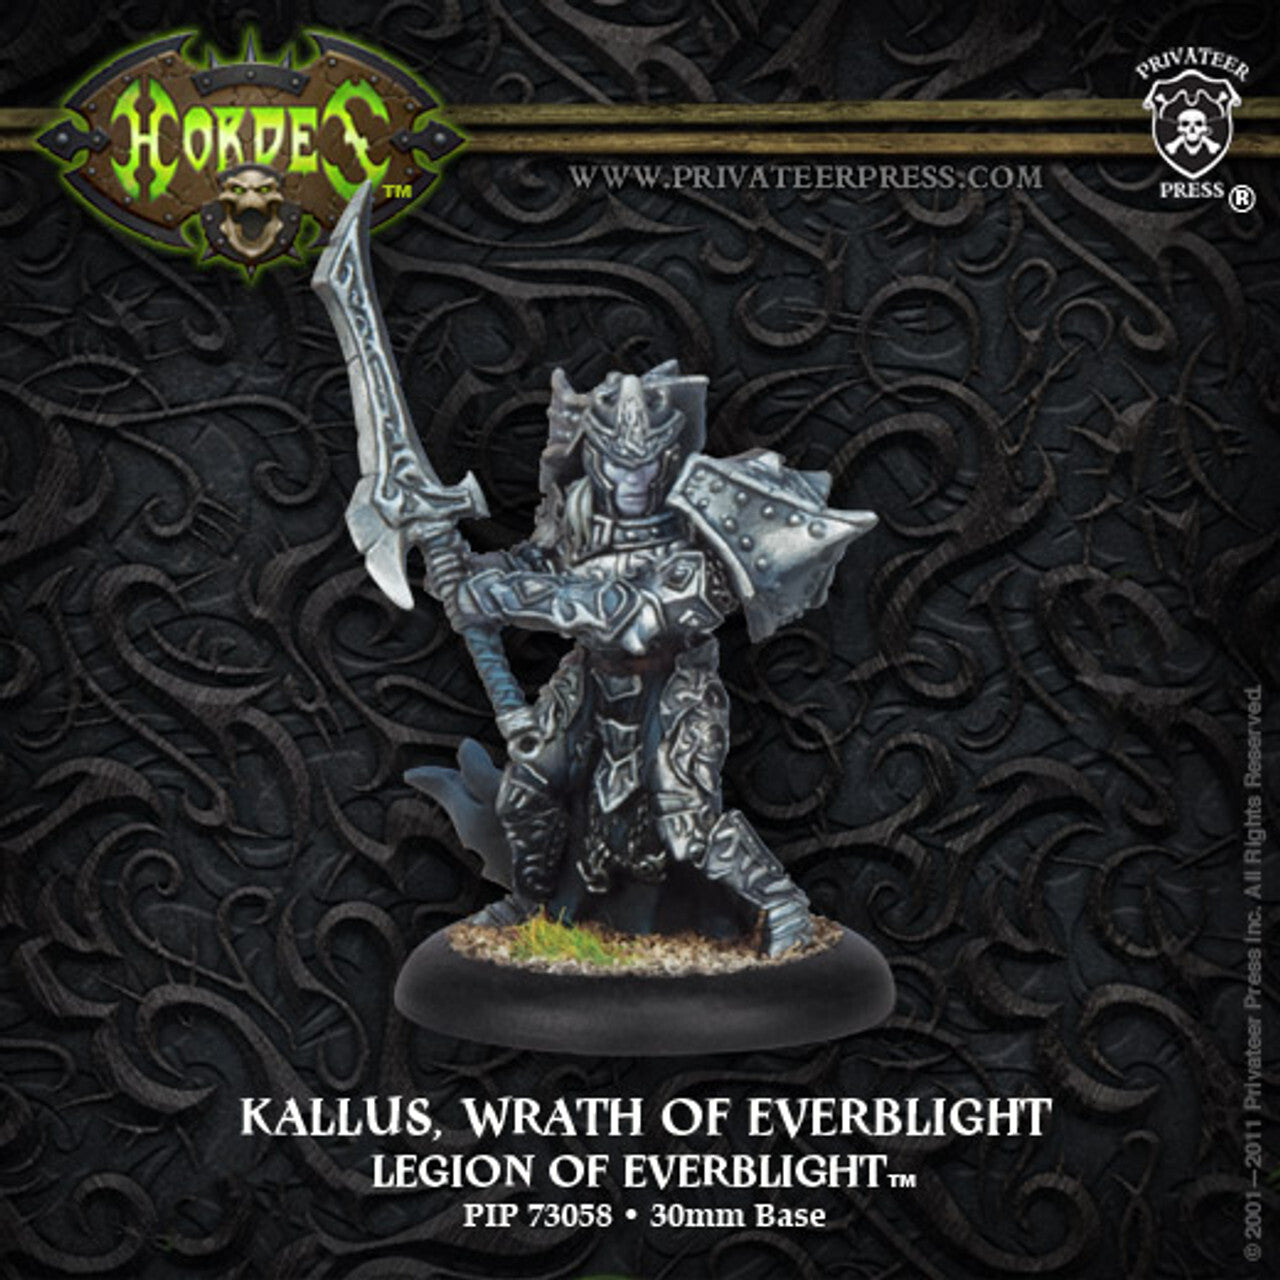 Kallus, Wrath of Everblight